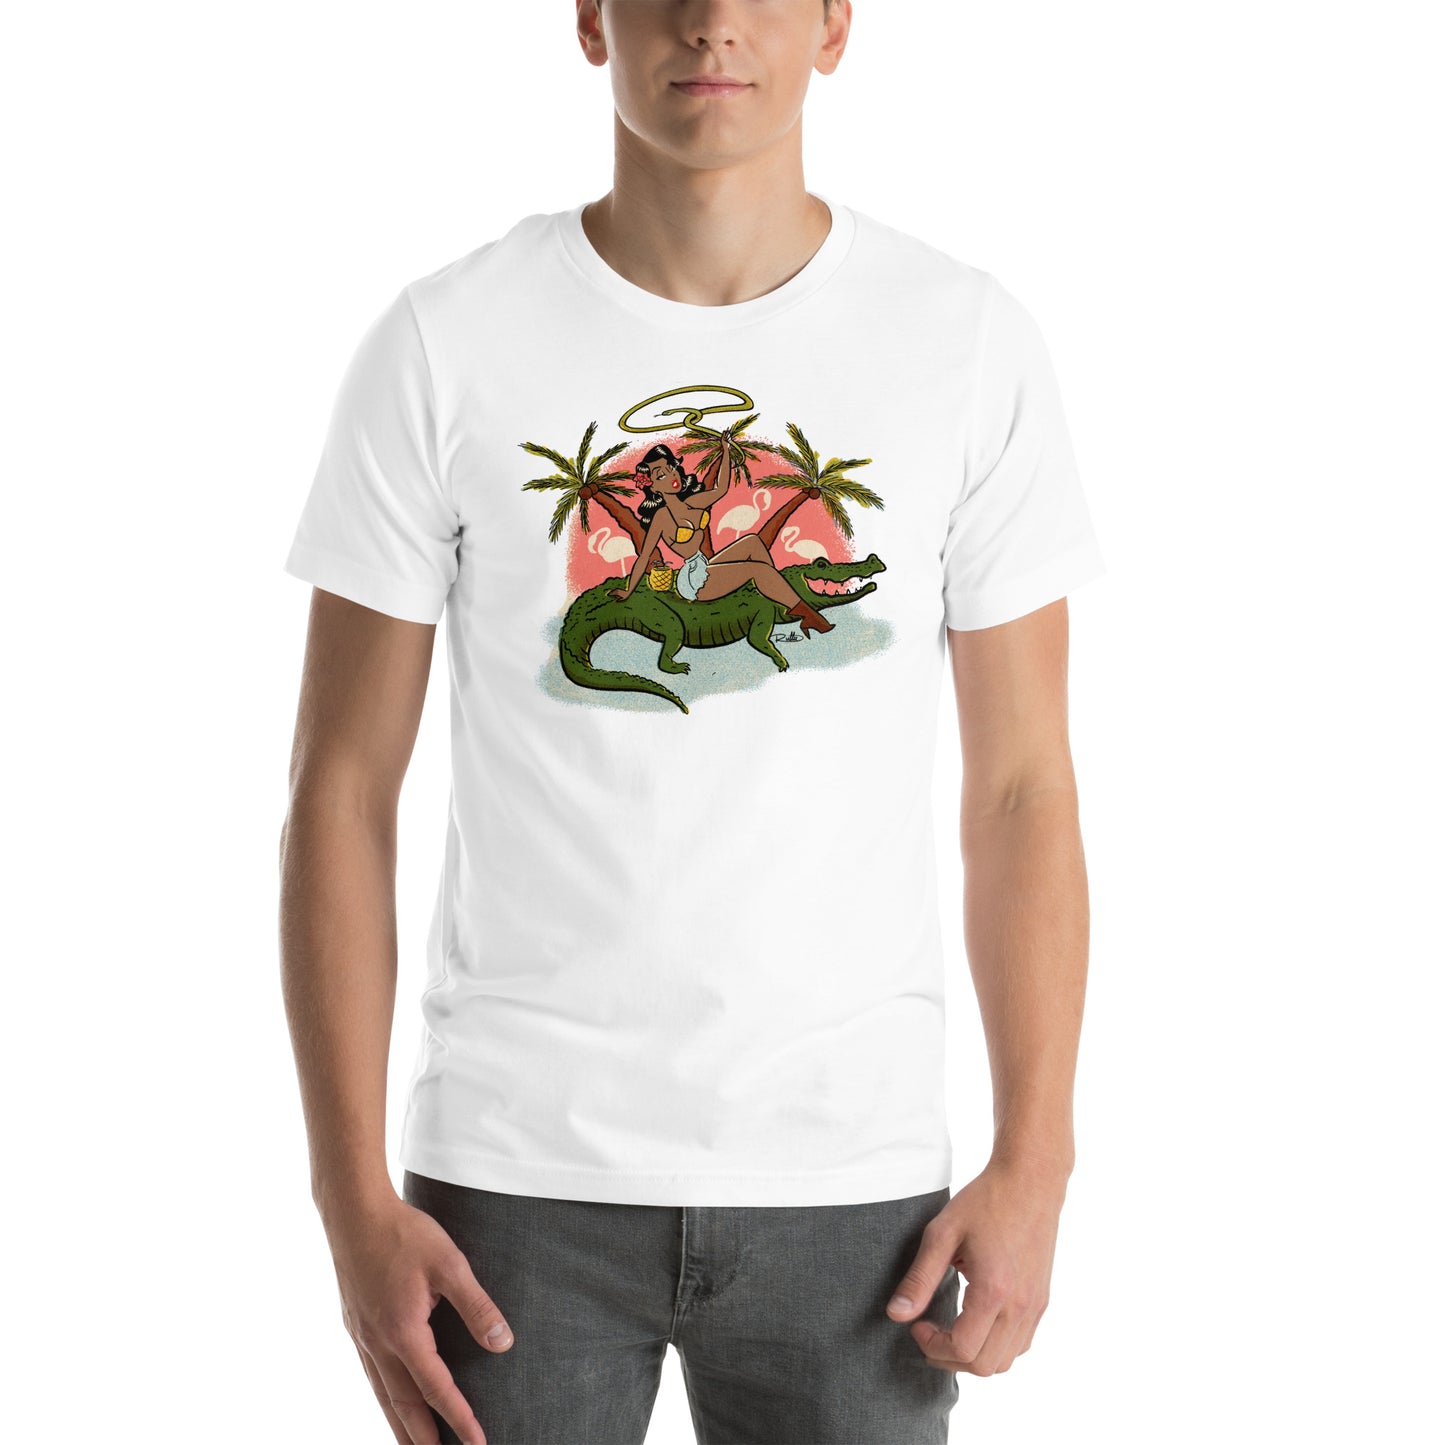 Dreama Gator Ridin' Short-Sleeve Unisex T-Shirt